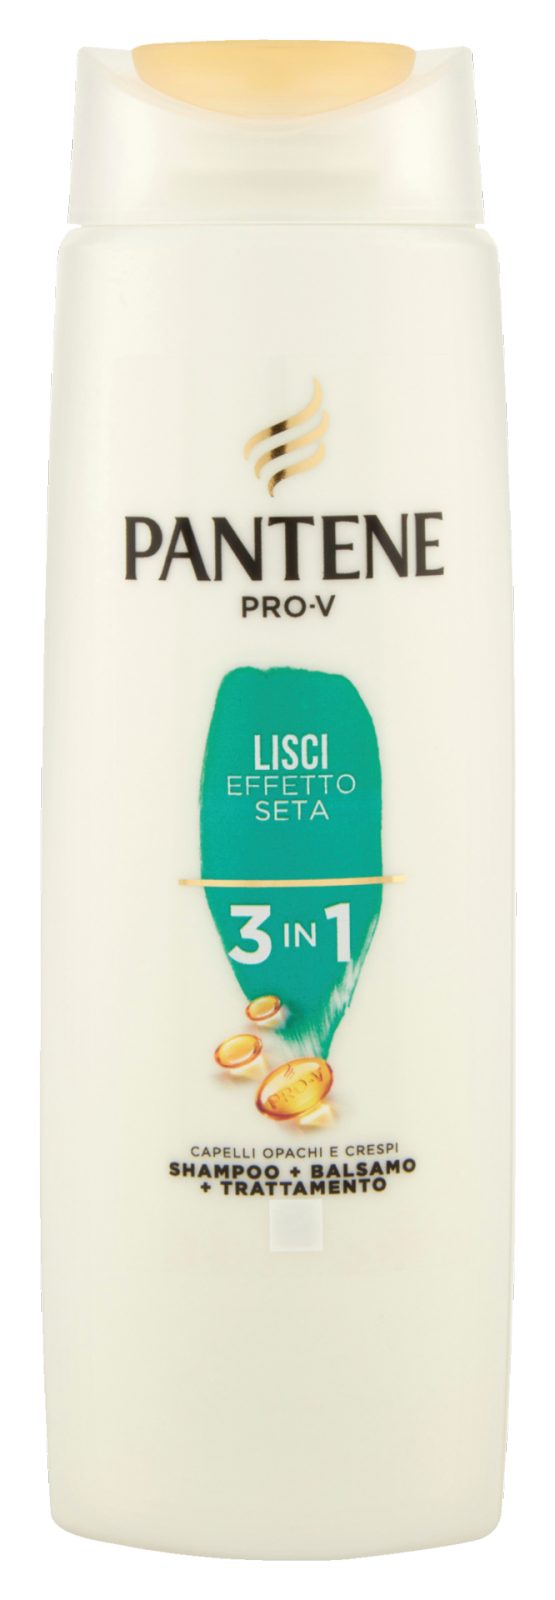 Shampoo Lisci Effetto Seta 3 in 1